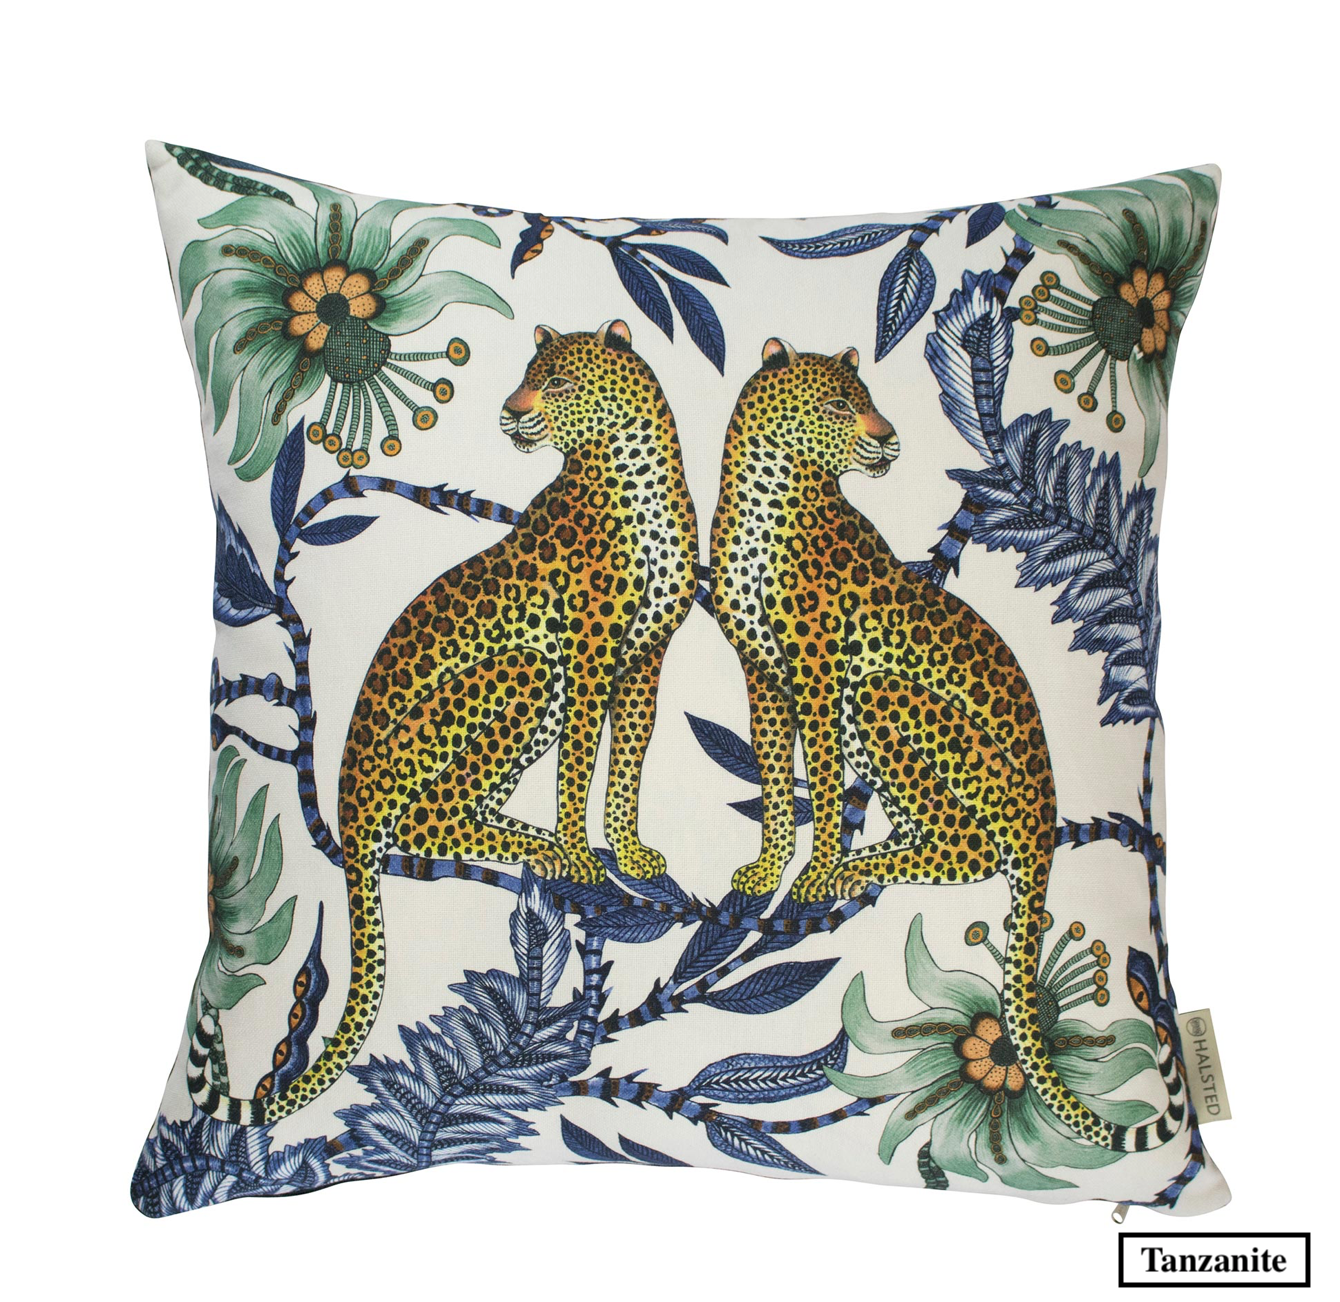 Ardmore Lovebird Leopard pillows from South Africa